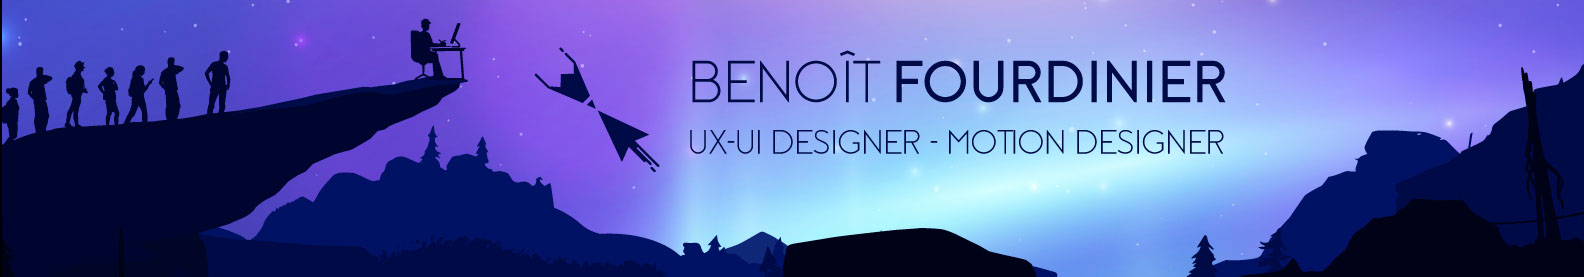 Benoit Fourdinier's profile banner